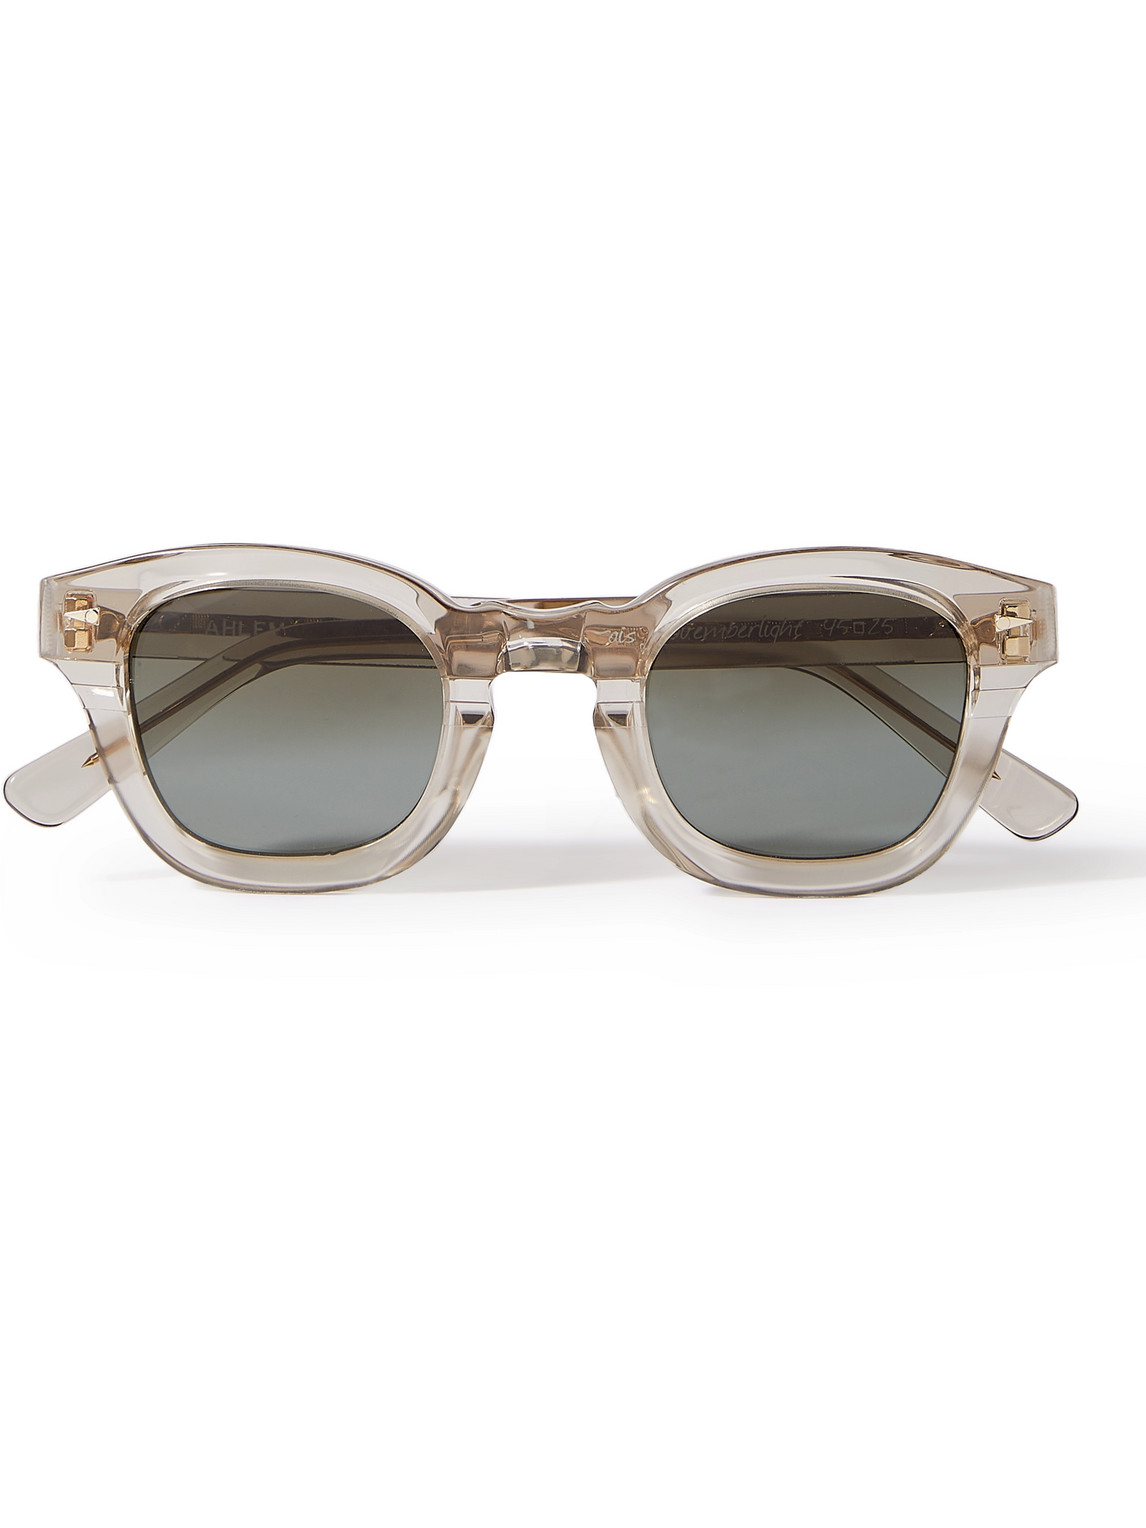 Ahlem Le Marais D-frame Acetate Sunglasses In Gray